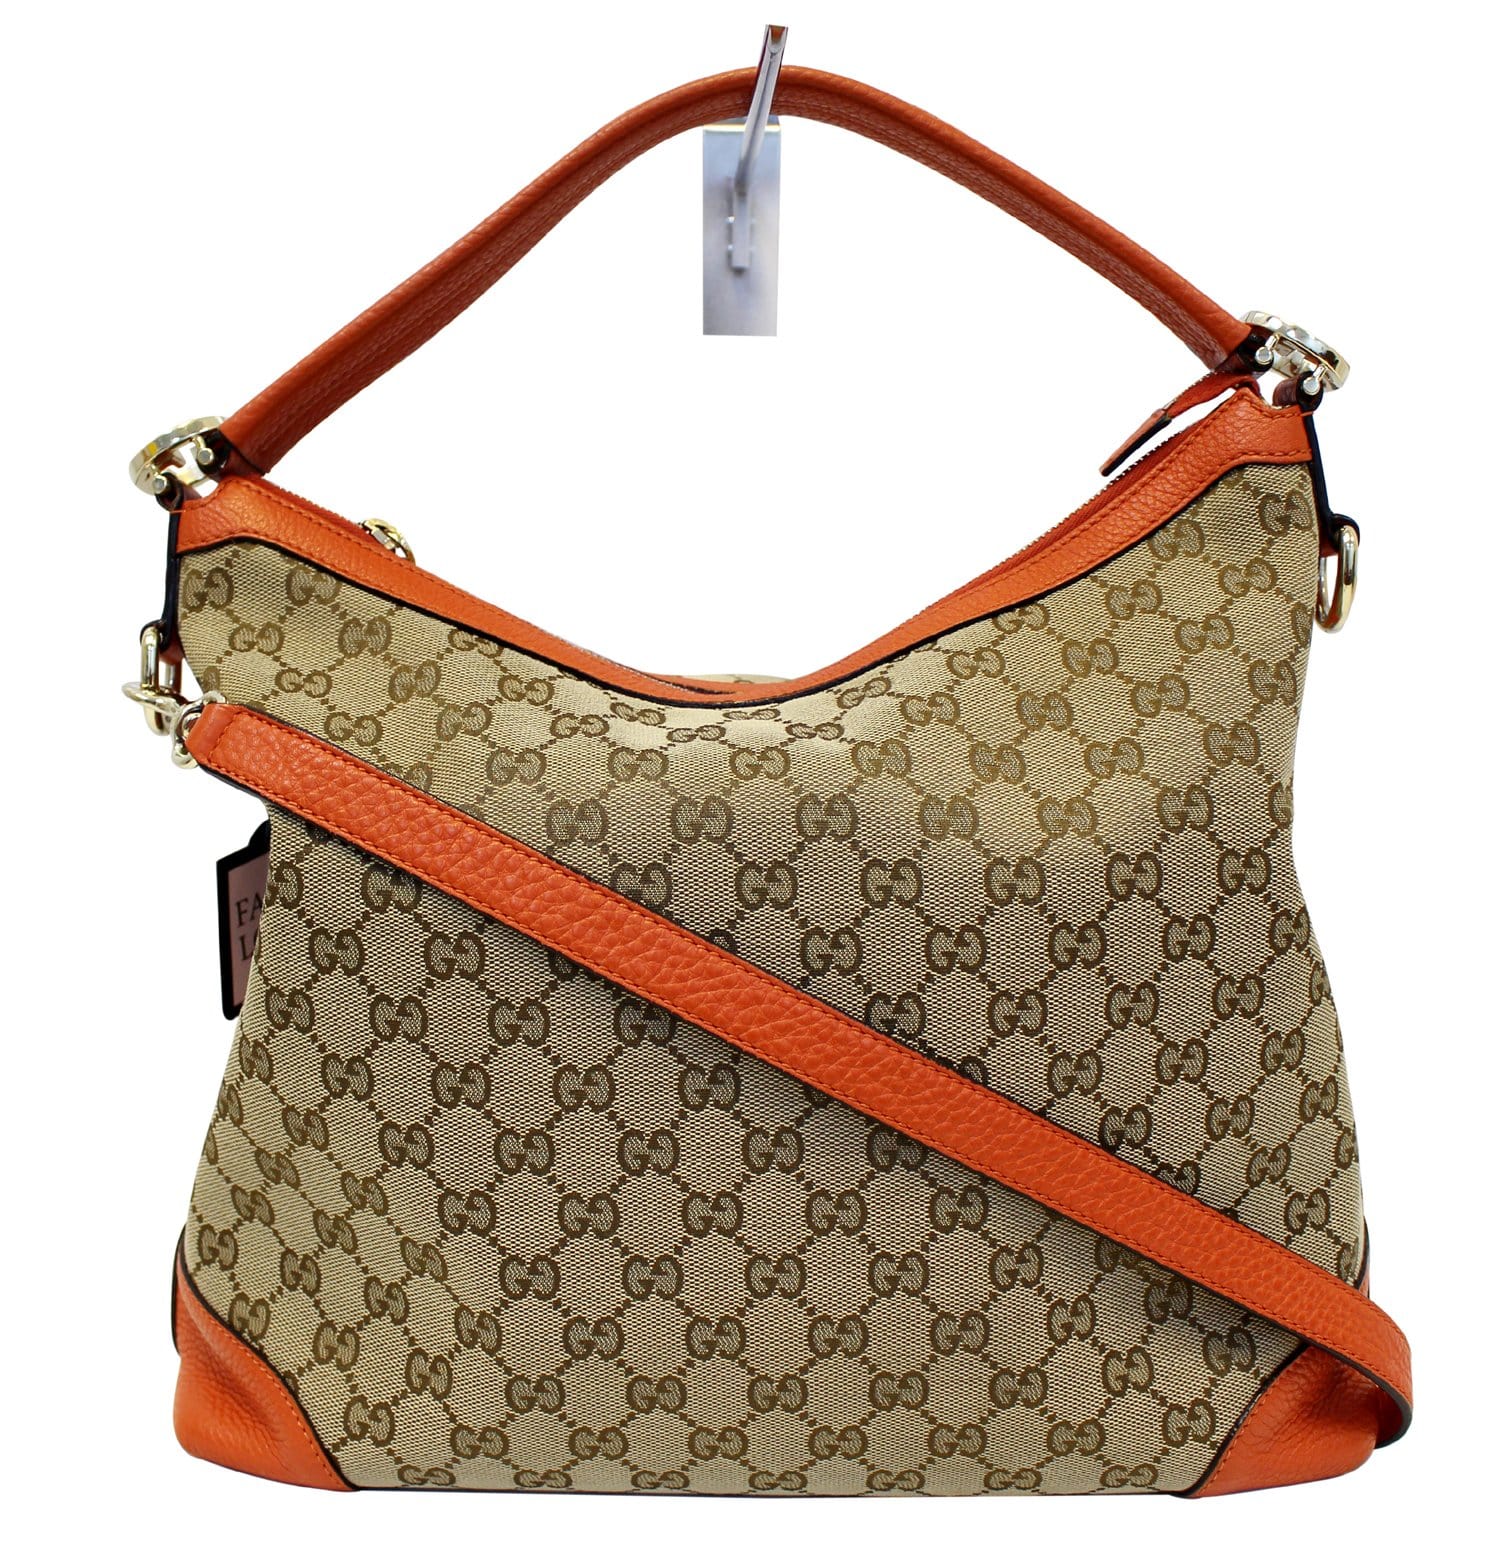 Gucci GG Canvas Beige Large Hobo Bag